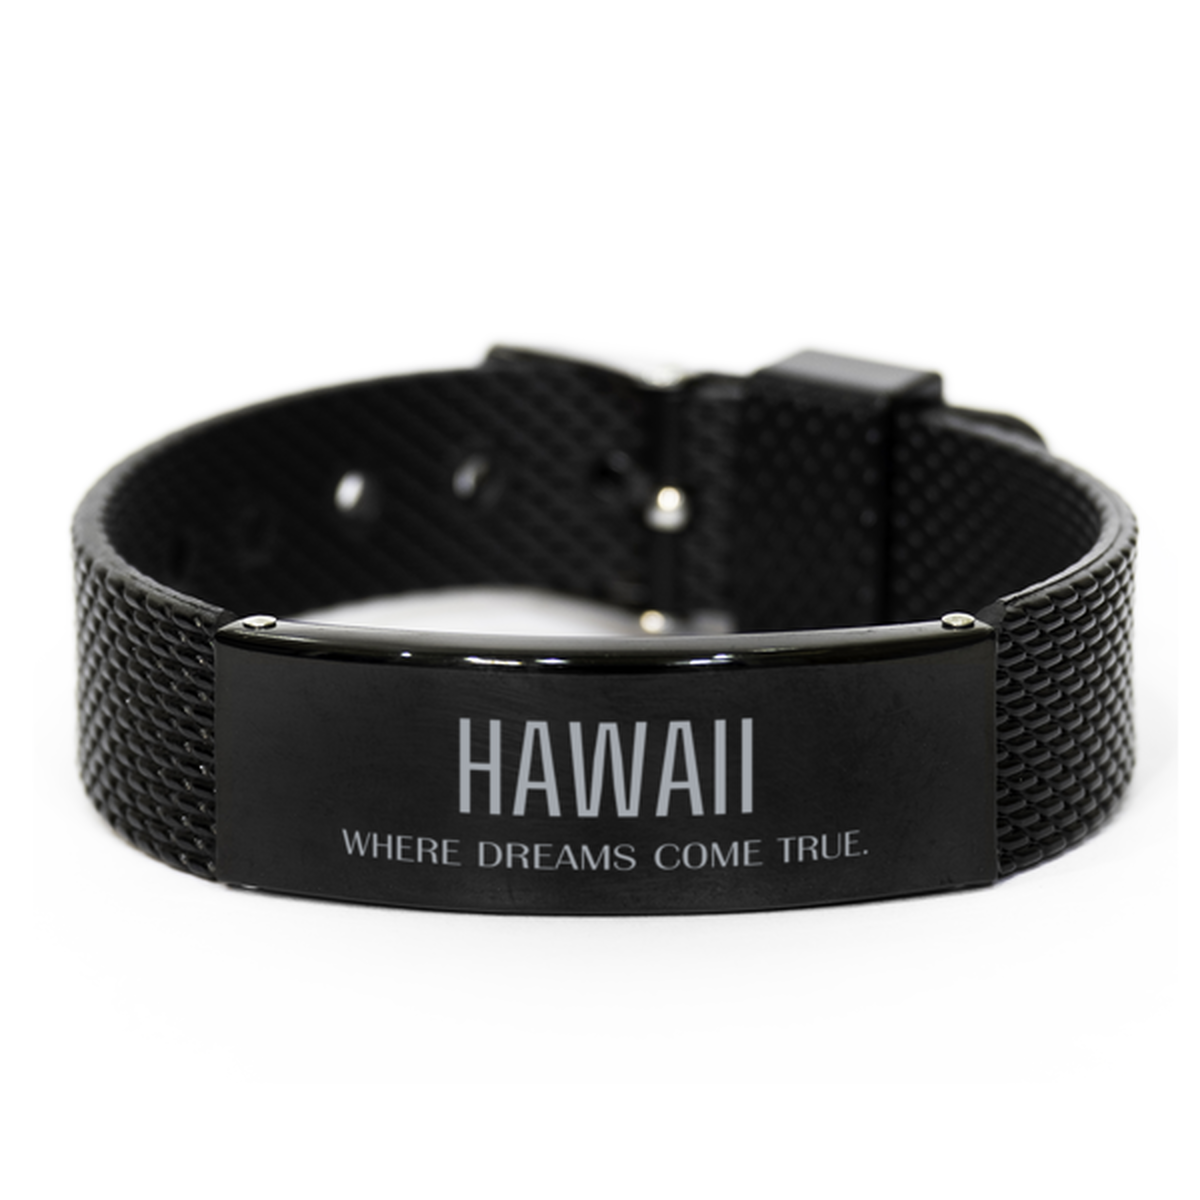 Love Hawaii State Black Shark Mesh Bracelet, Hawaii Where dreams come true, Birthday Inspirational Gifts For Hawaii Men, Women, Friends